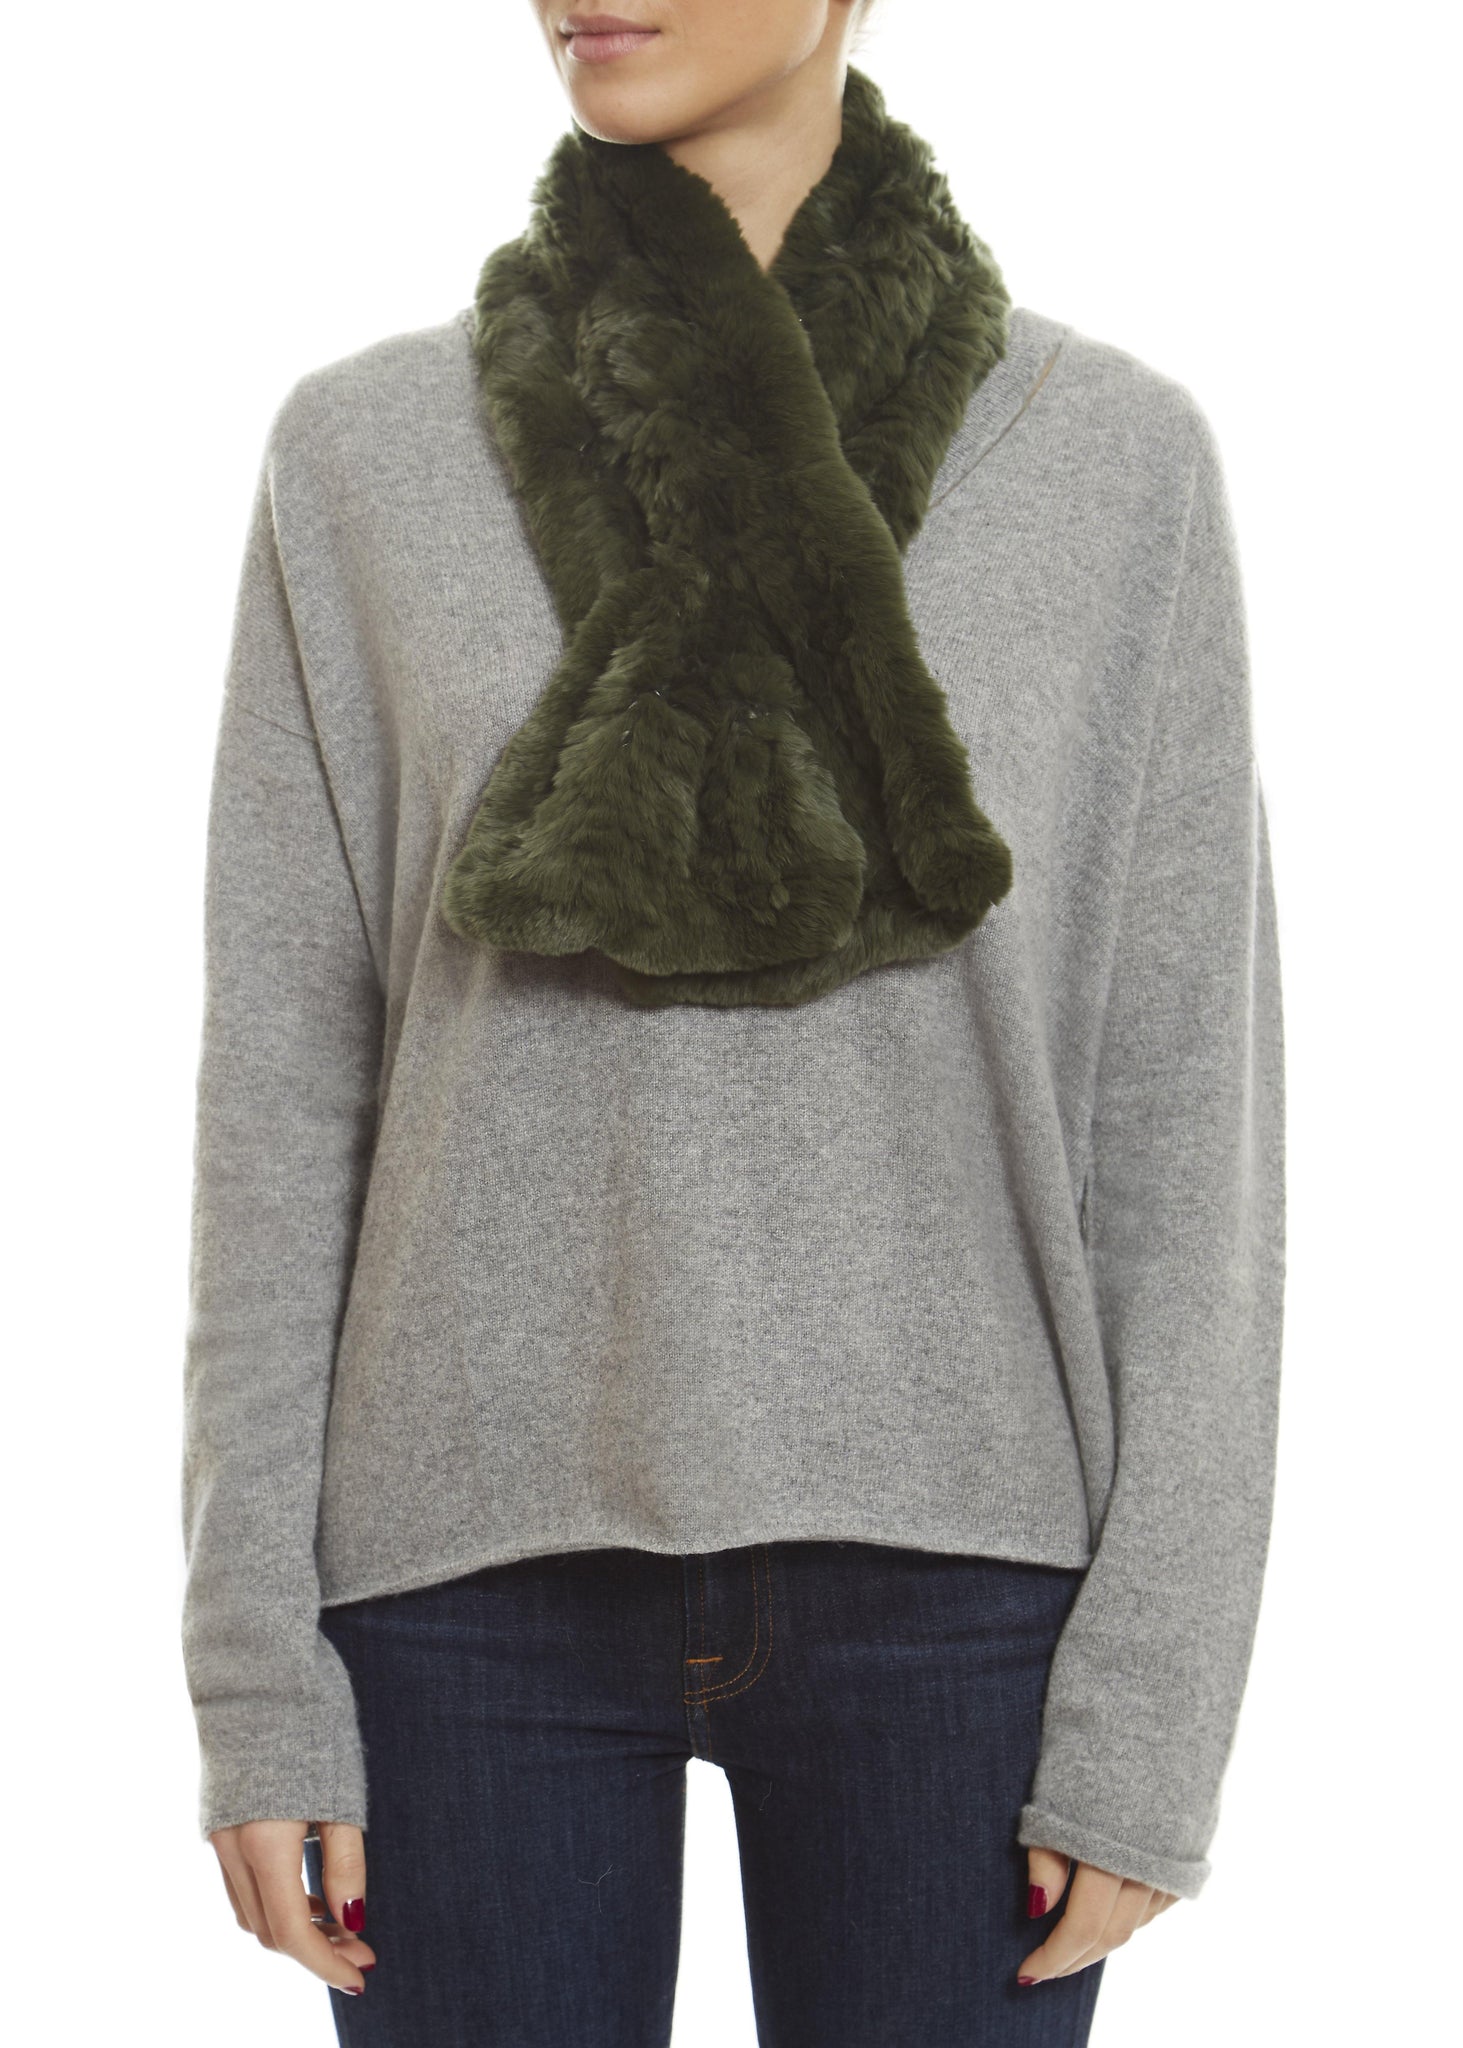 Knitted Rex Rabbit Khaki 'Loop' Luxury Fur Scarf - Jessimara